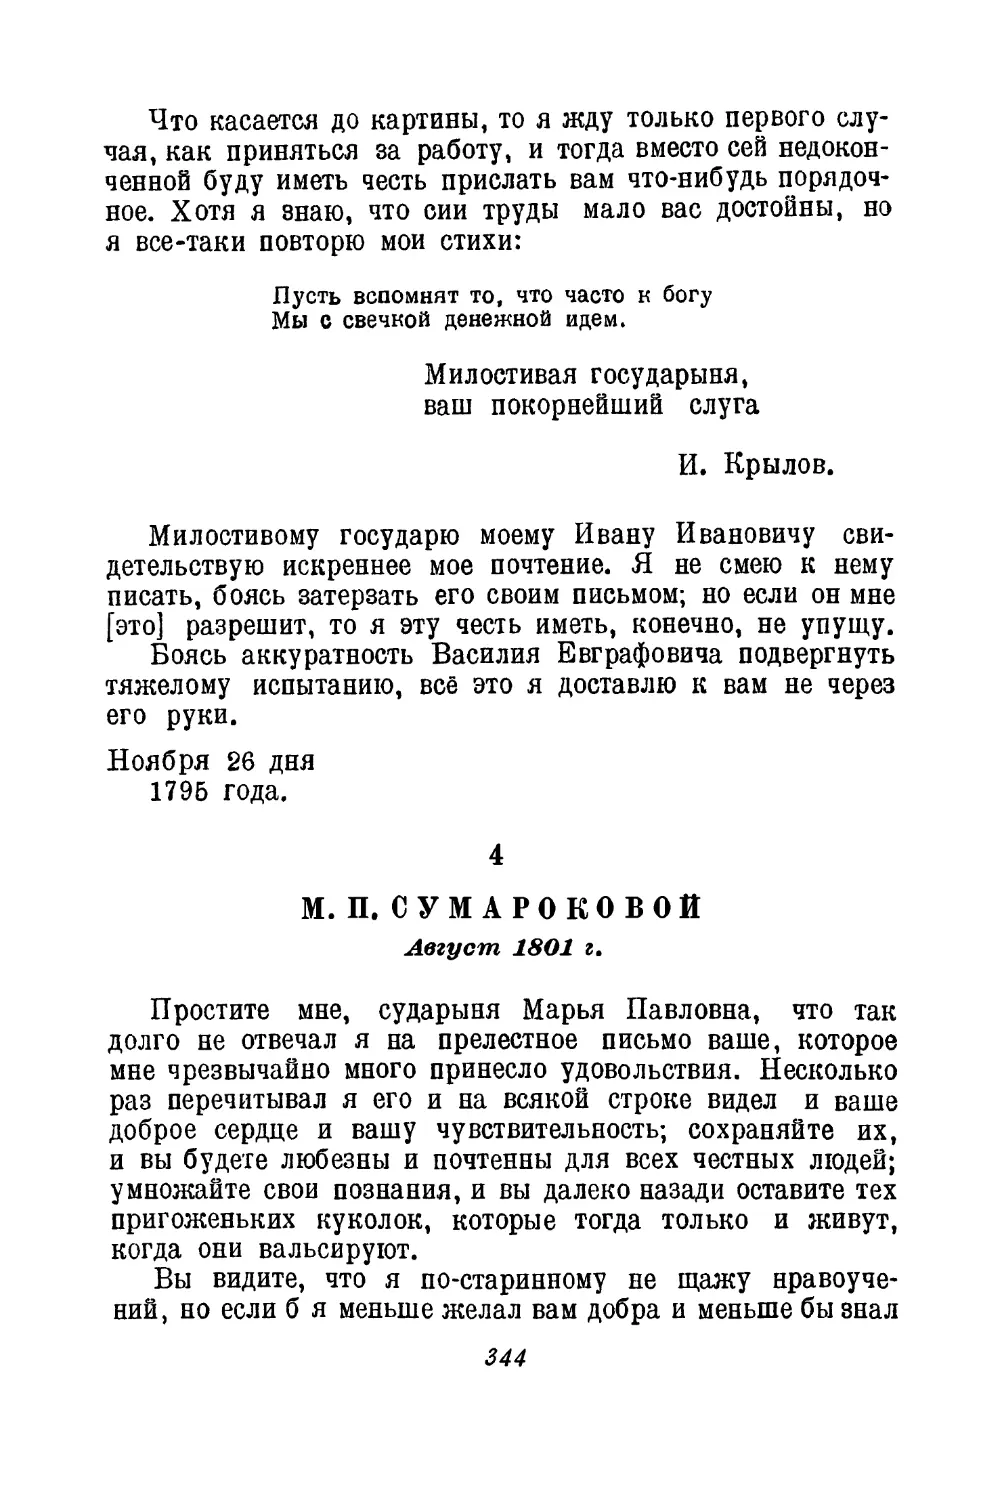 4. М. П. Сумароковой. Август 1801 г.